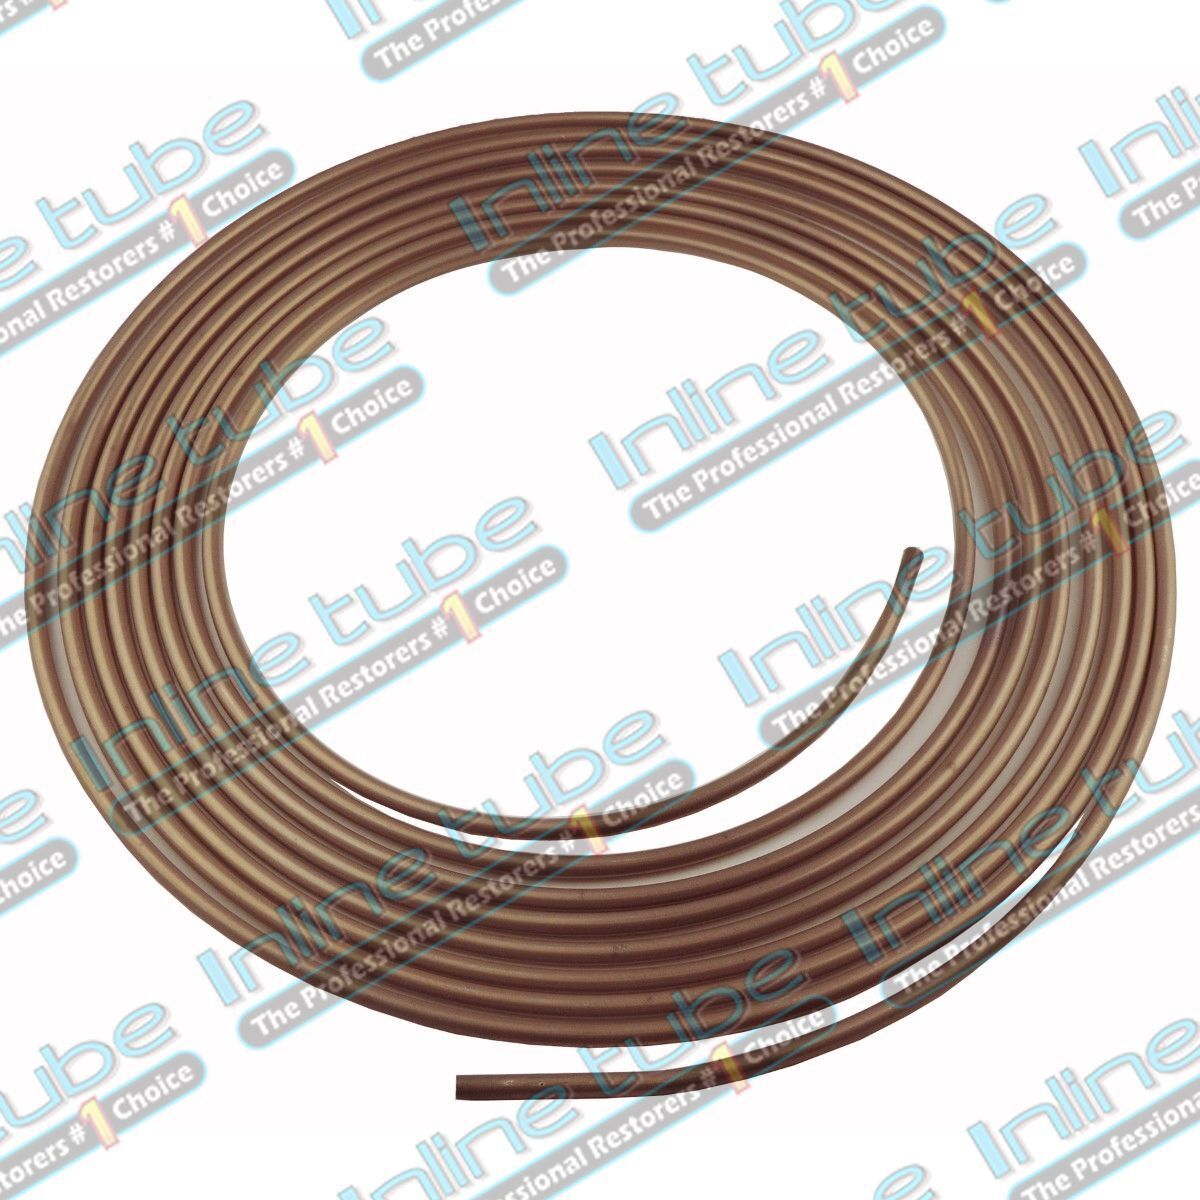 Copper Nickel Brake Line Tubing Kit 1/4 Od 25 Foot Coil Roll Usa Inline Tube Cn4